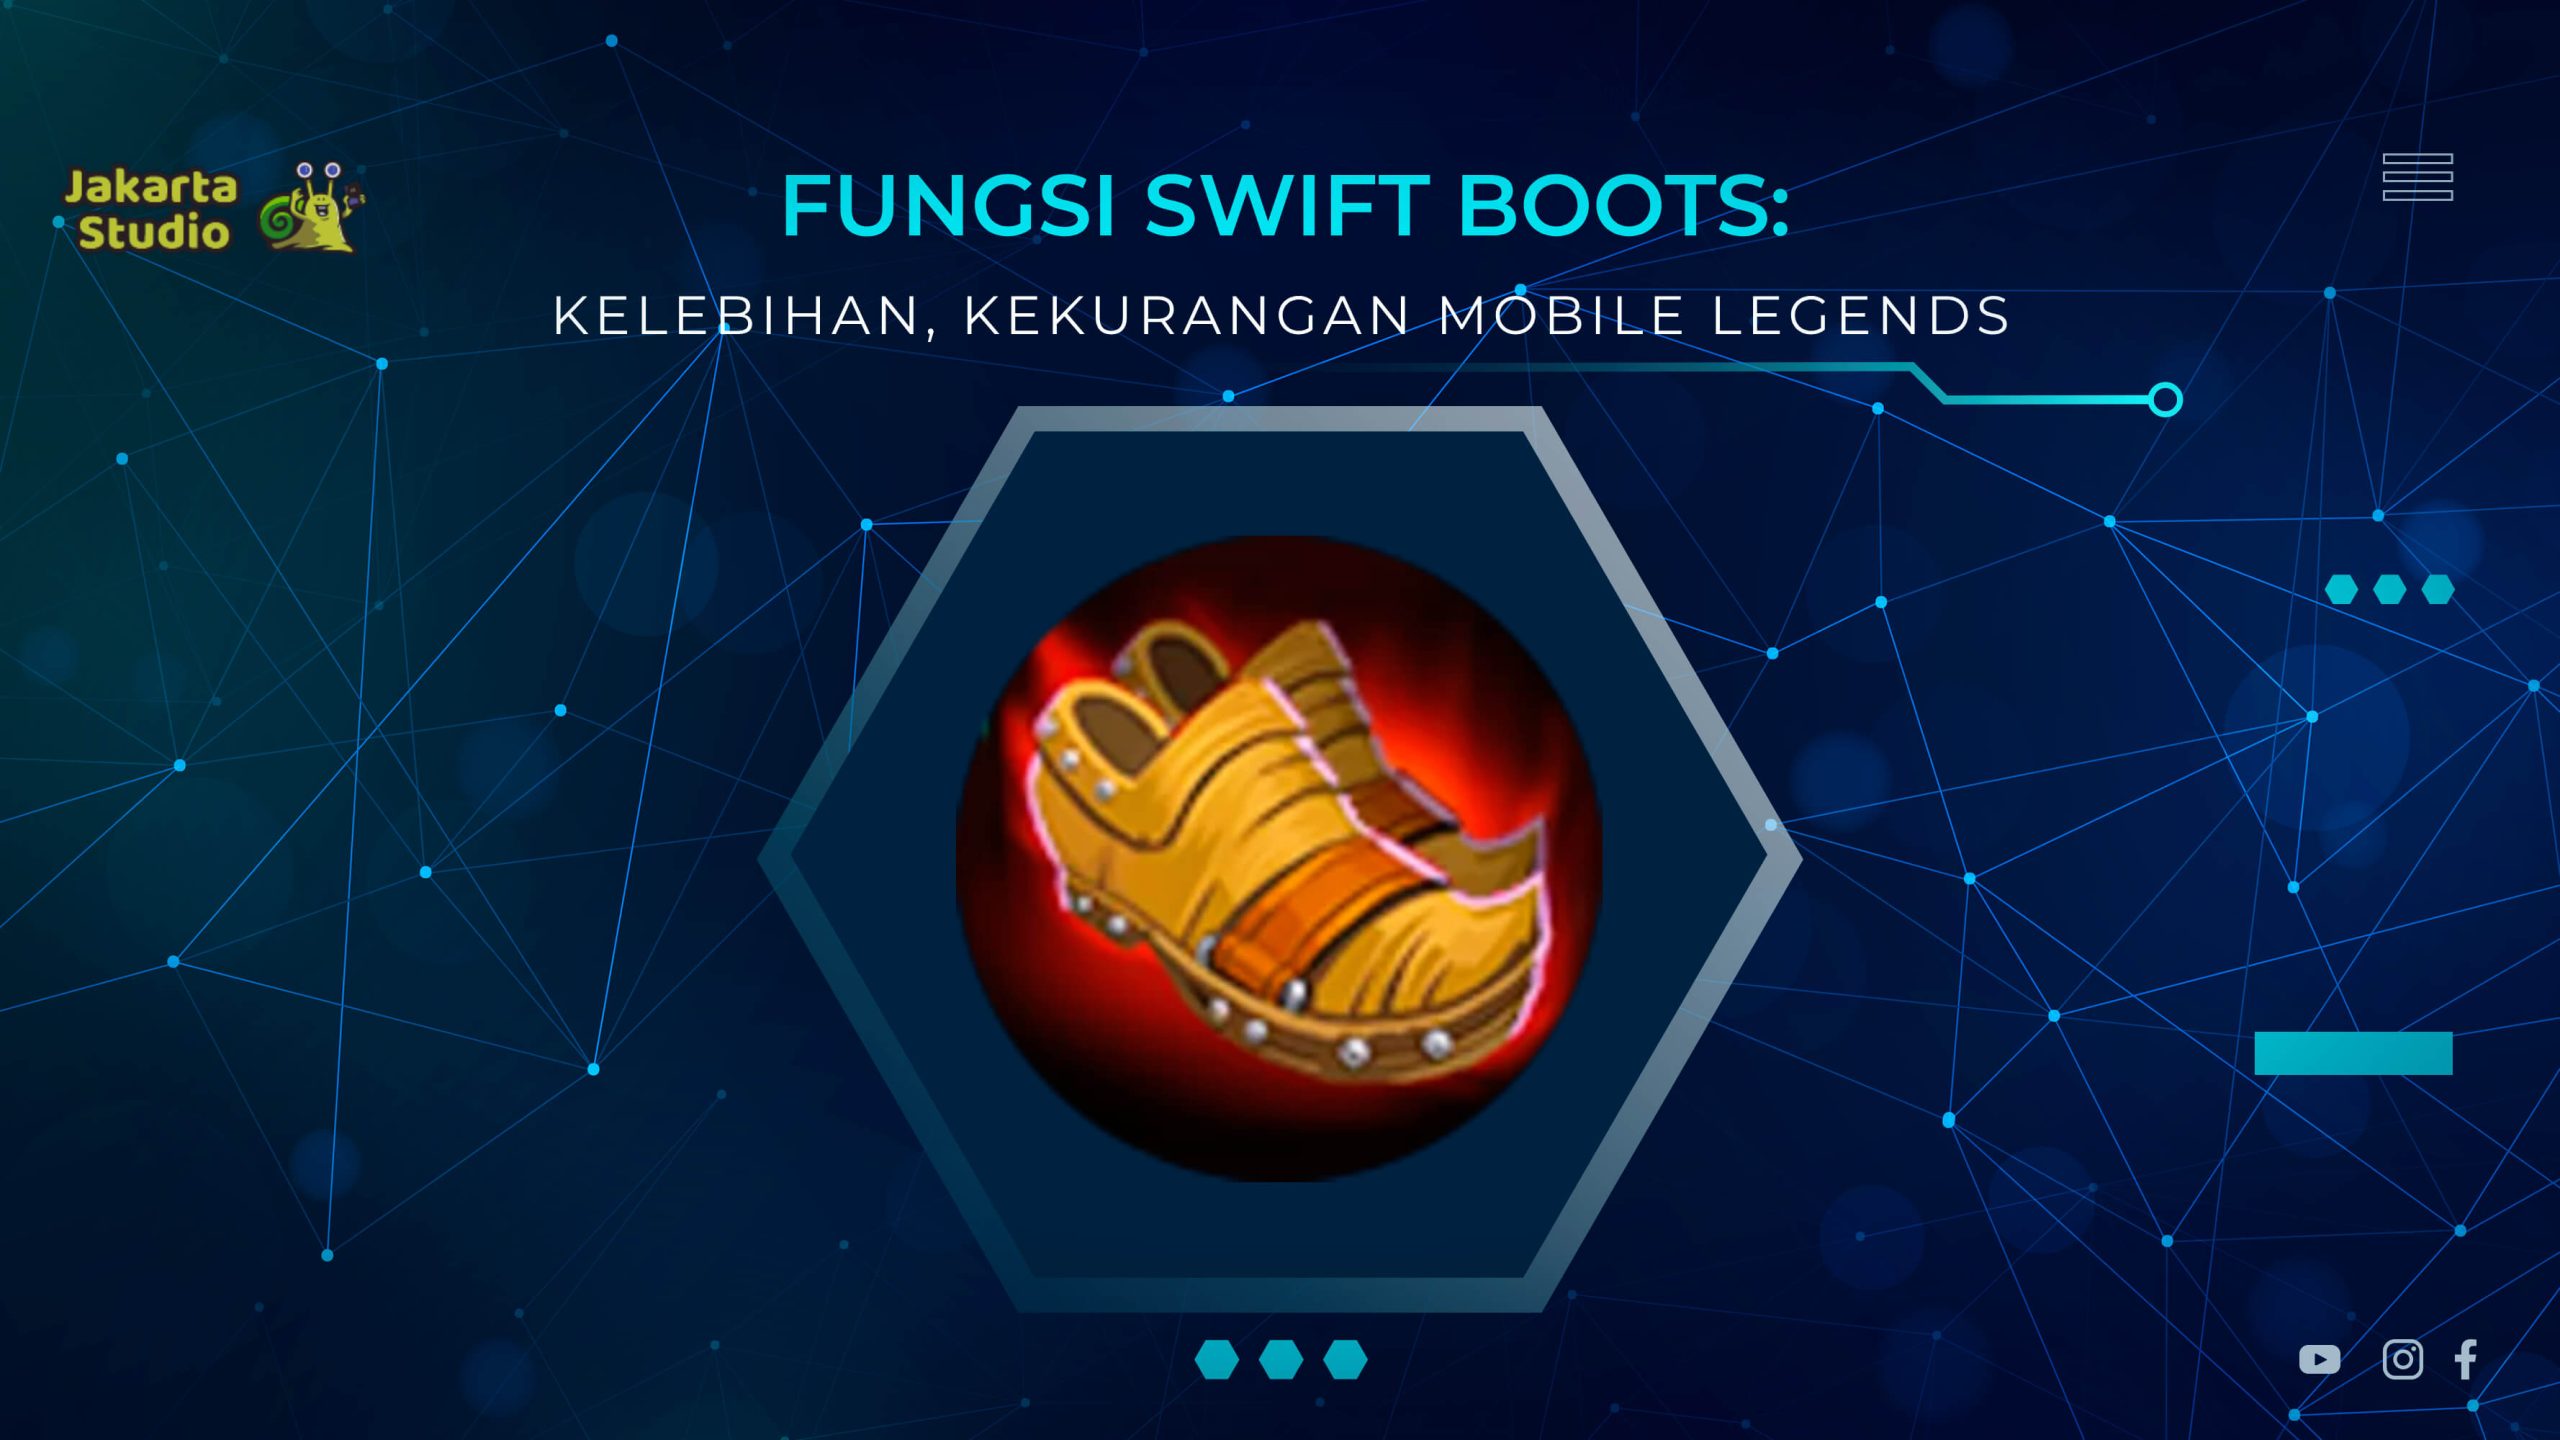 Fungsi Swift Boots : Fungsi, Kelebihan, Kekurangan Mobile Legends